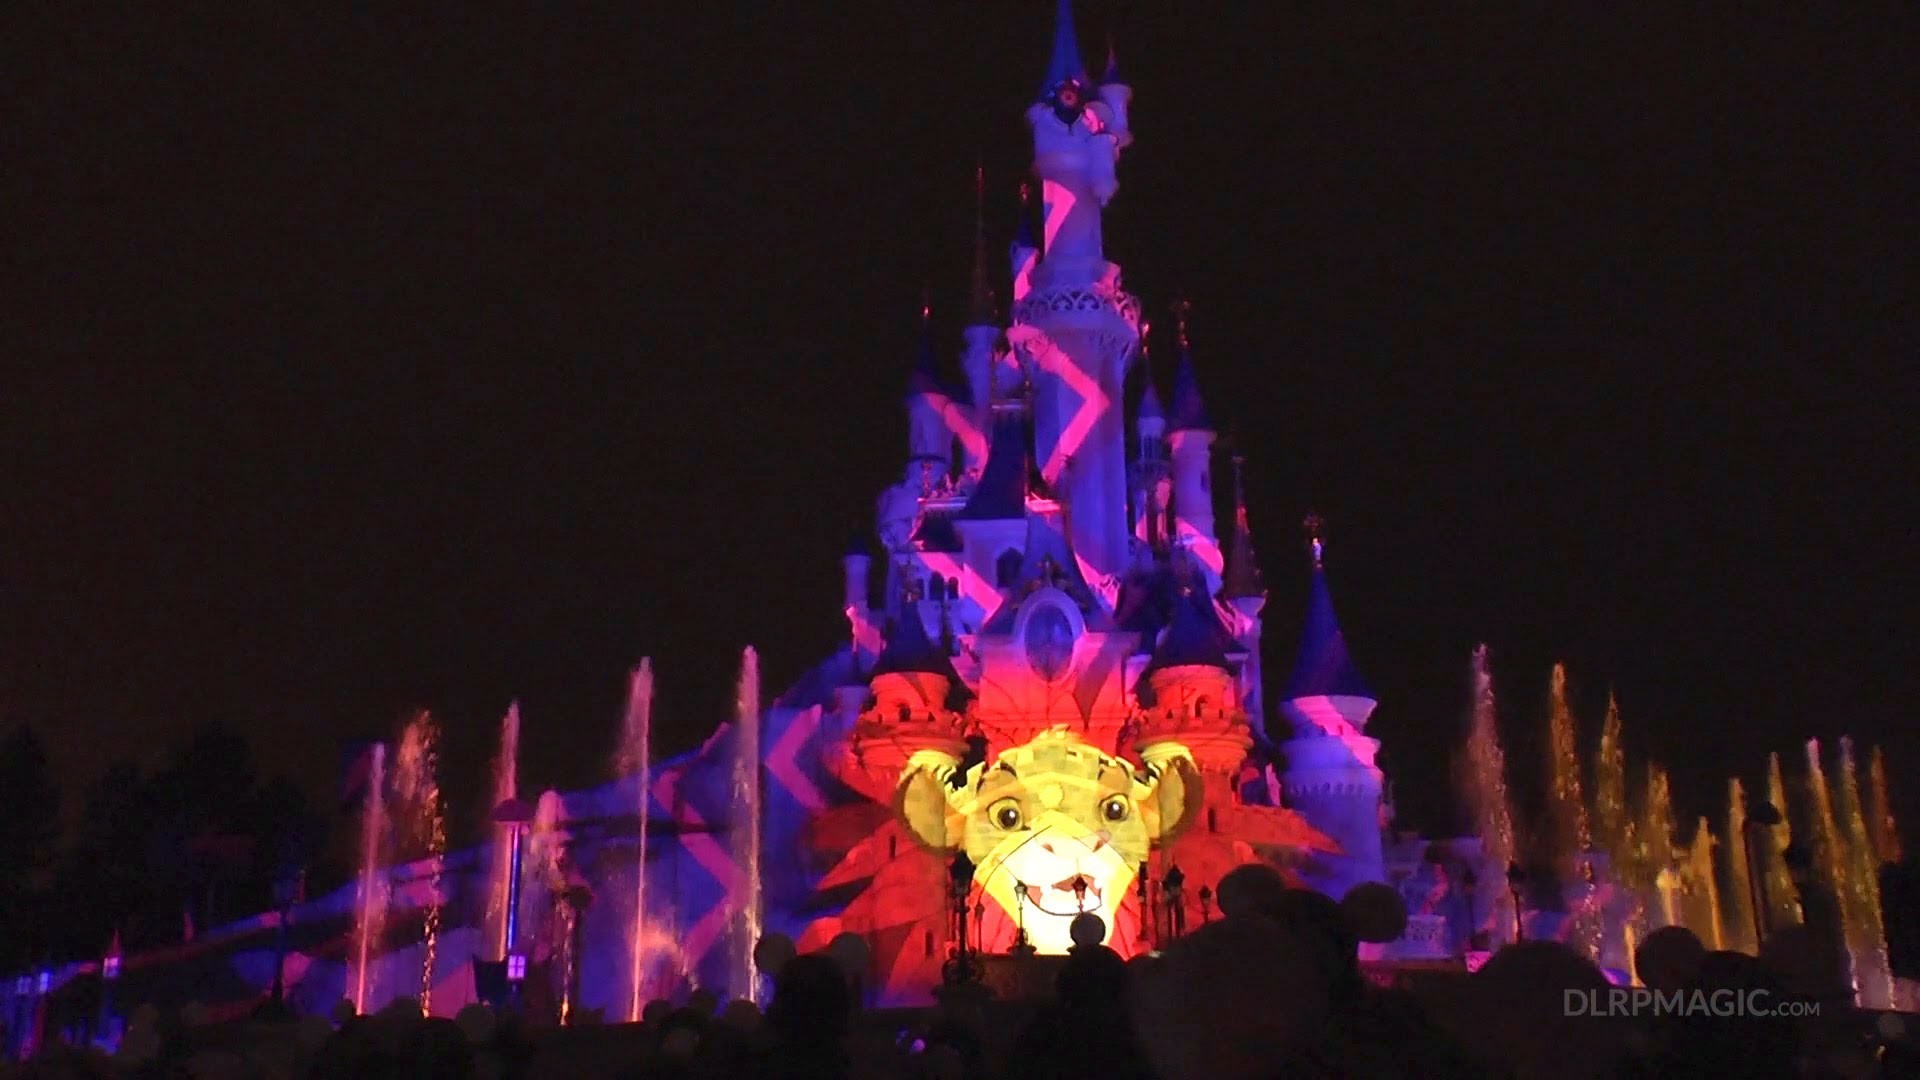 1920x1080 The Lion King "I Just Can't Wait" "Hakuna Matata" scene - Disneyland Paris  - YouTube